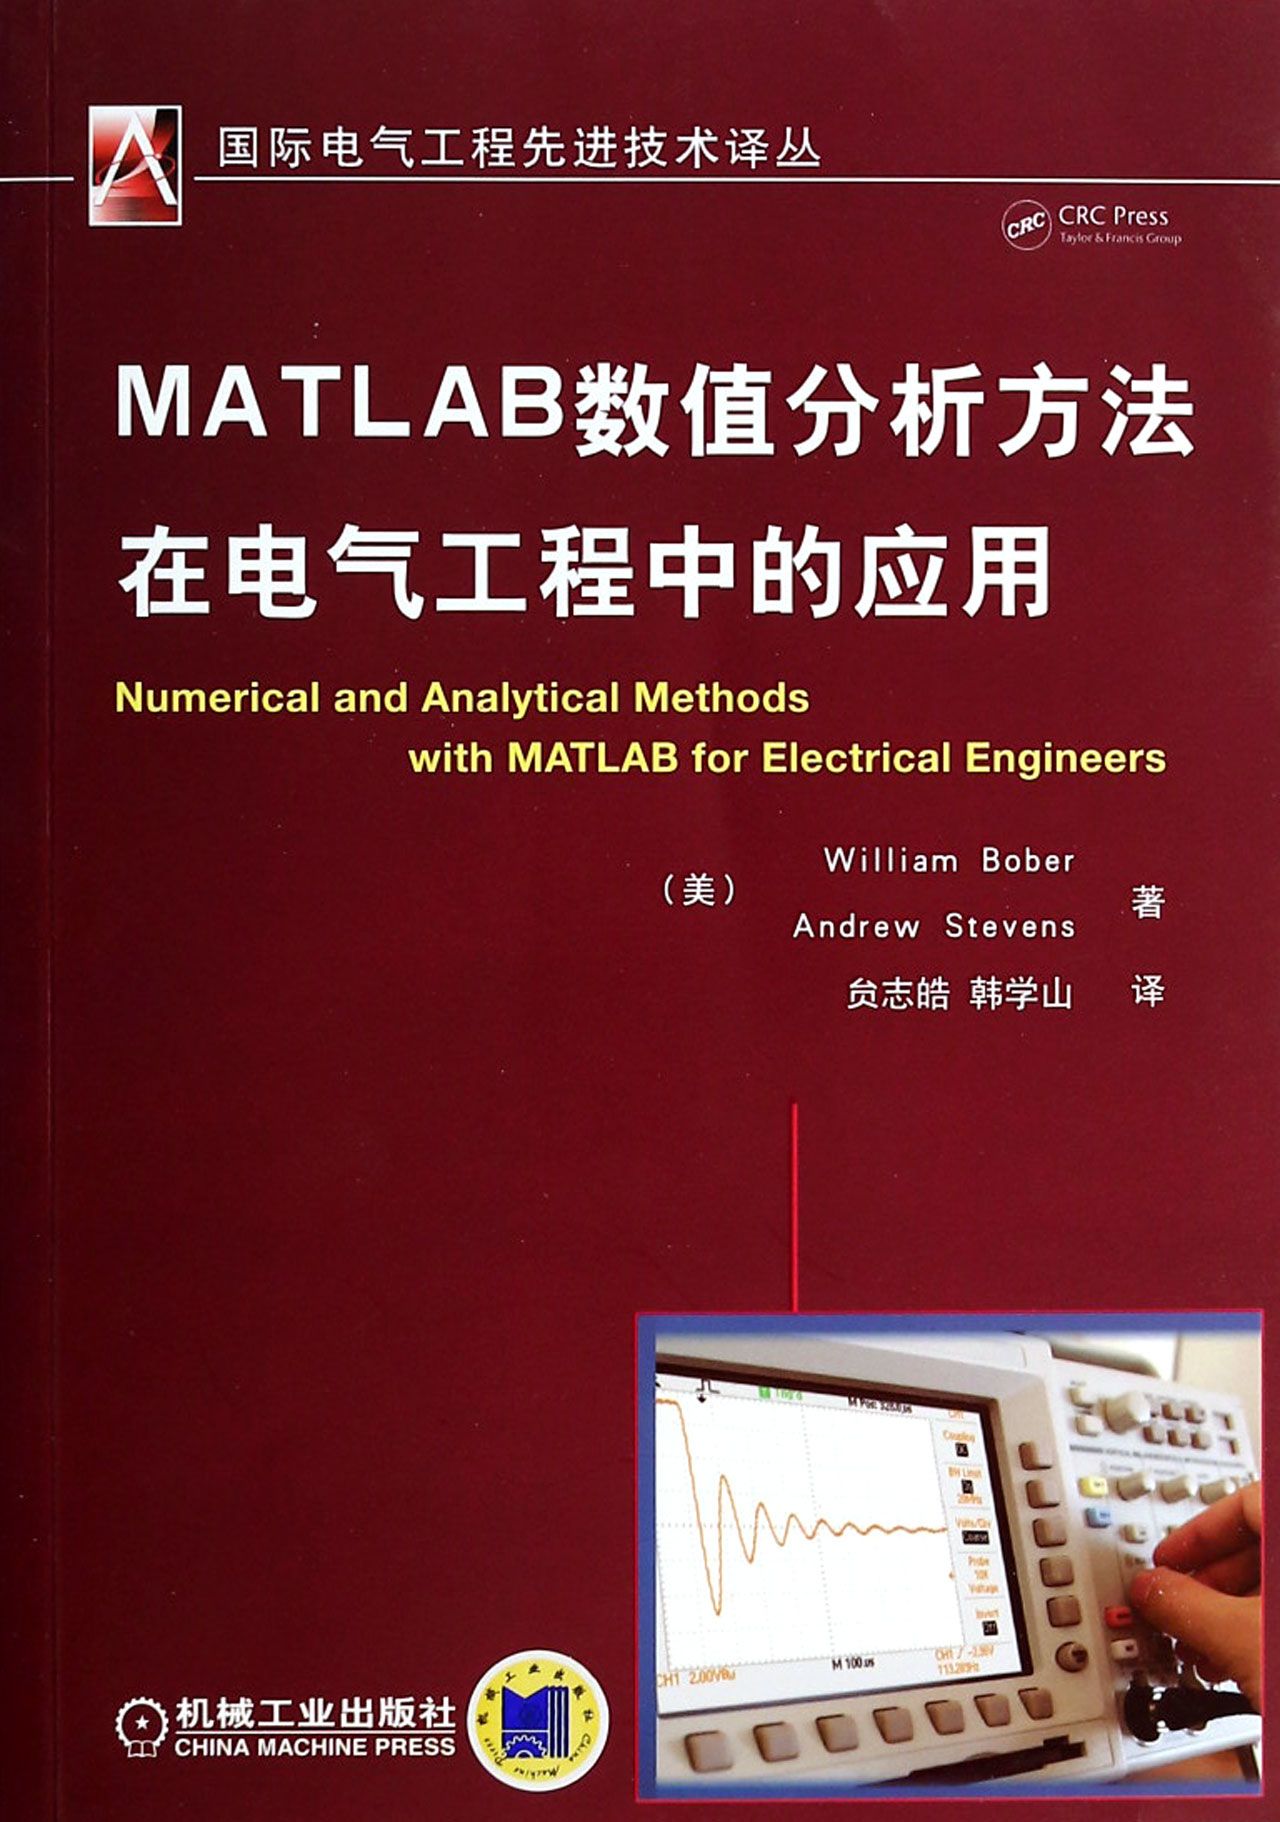 MATLAB数值分析方法在电气工程中的应用-博